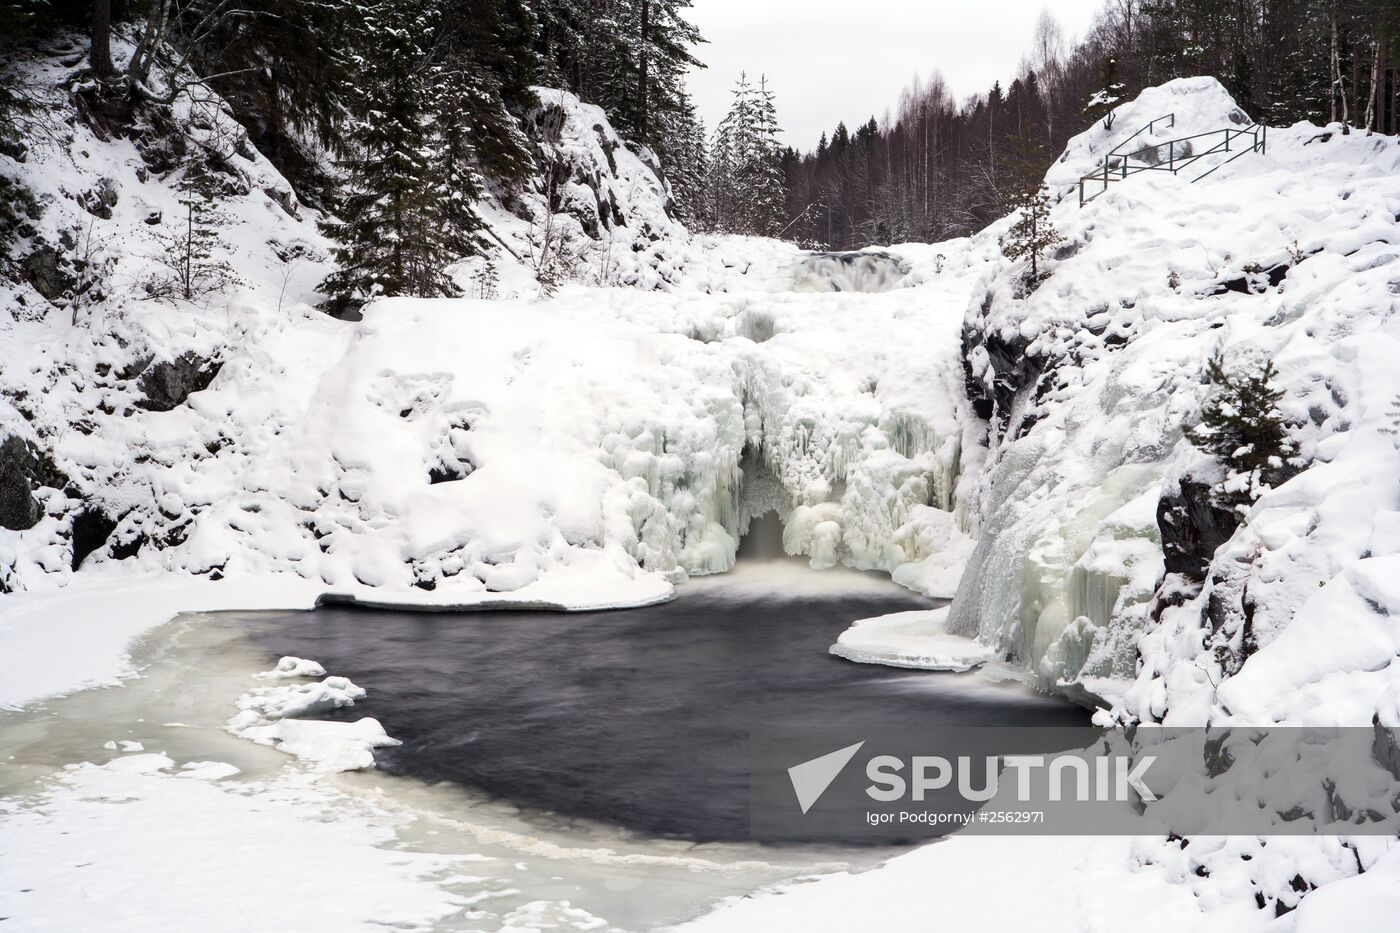 Kivach Falls in a stet nature reserve, Karelia